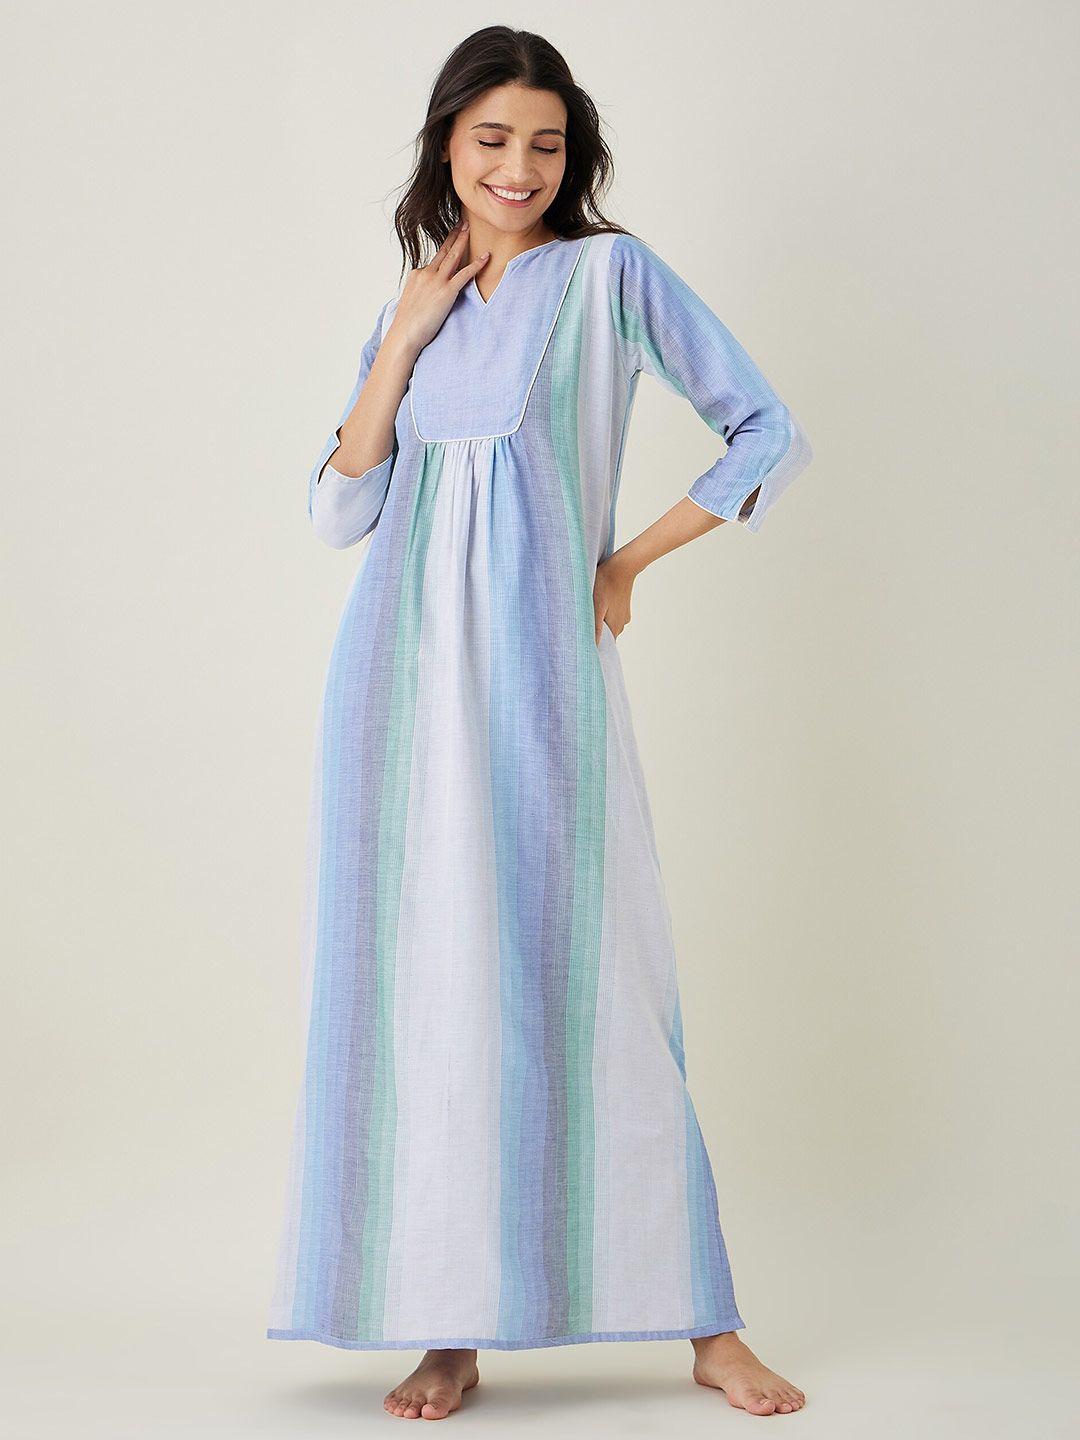 the-kaftan-company-blue-and-white-striped-pure-cotton-maxi-nightdress